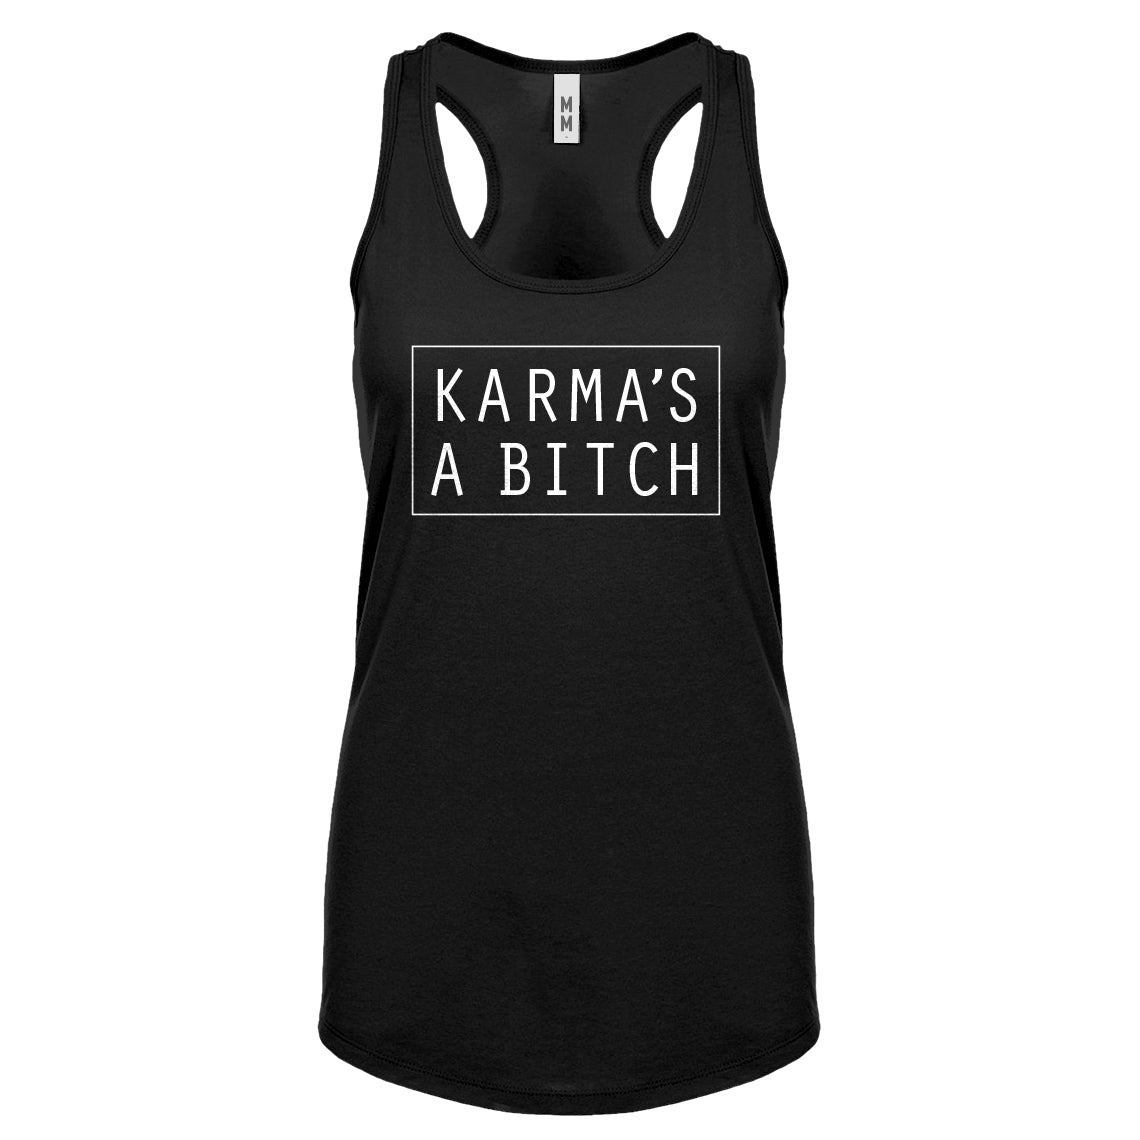 Racerback Karma's a Bitch Womens Tank Top